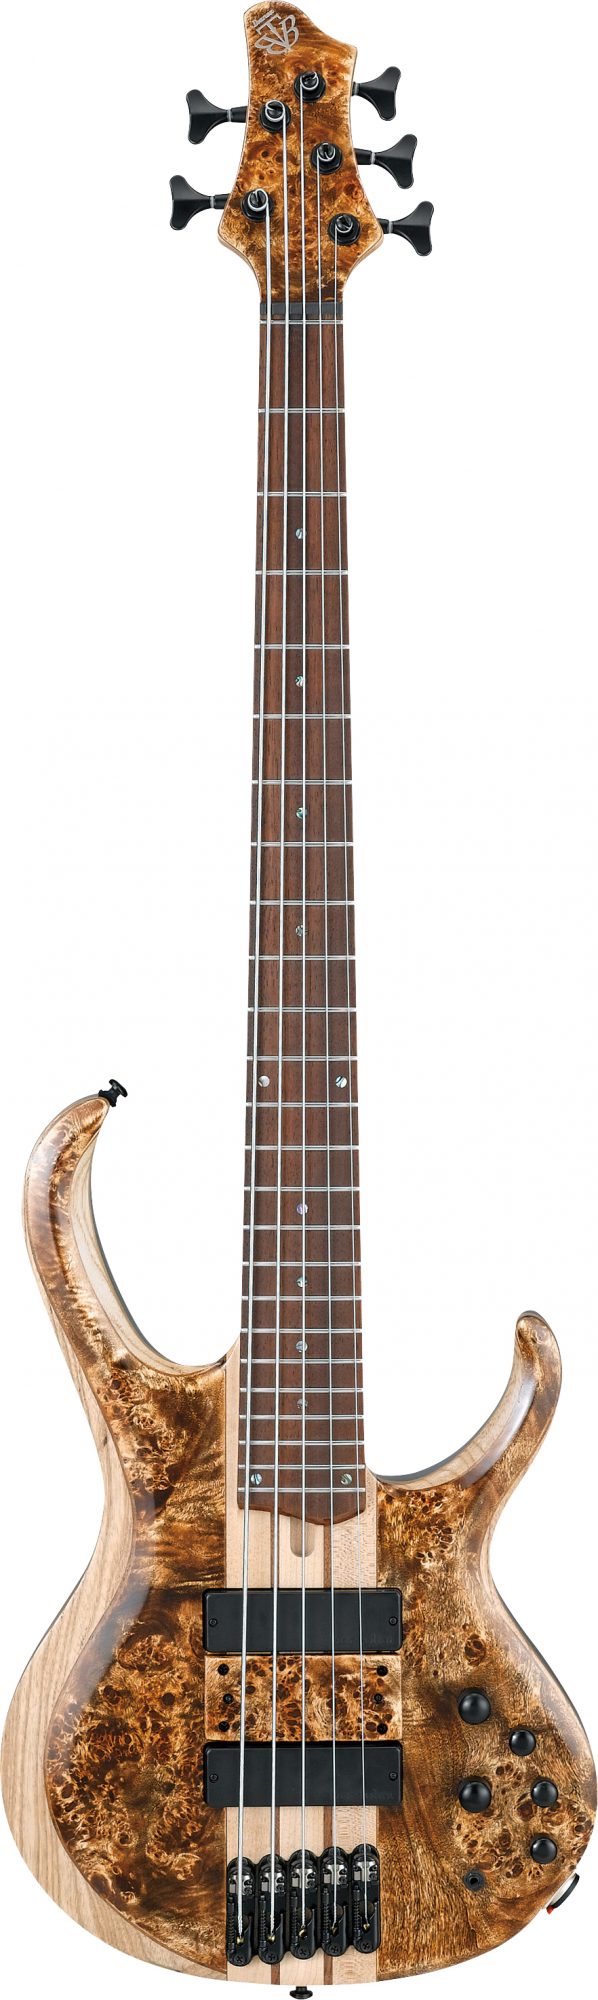 Ibanez BTB845V Bass Workshop 5-String Electric Bass Guitar